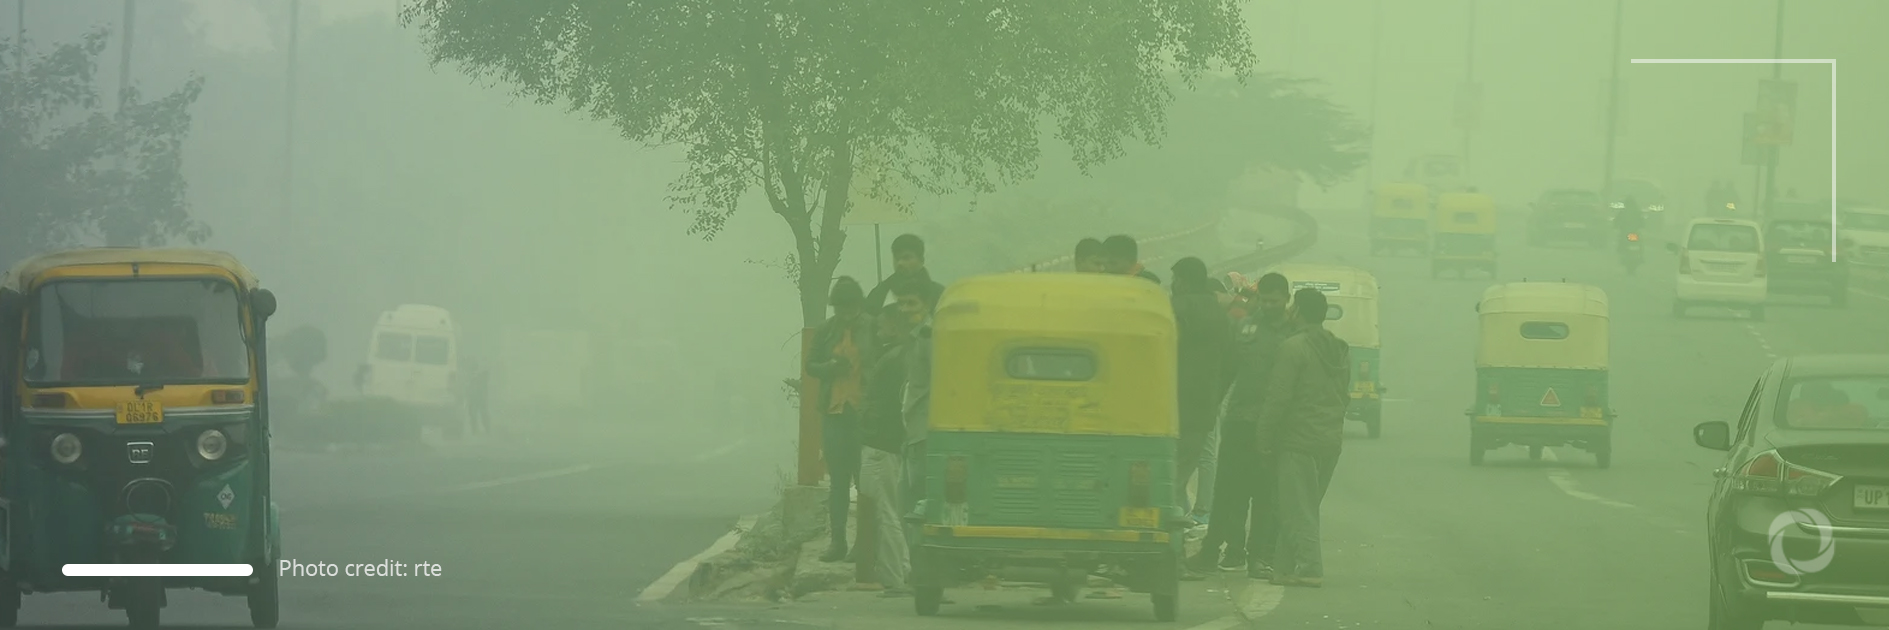 New Delhi choked in smog again as winter season starts 